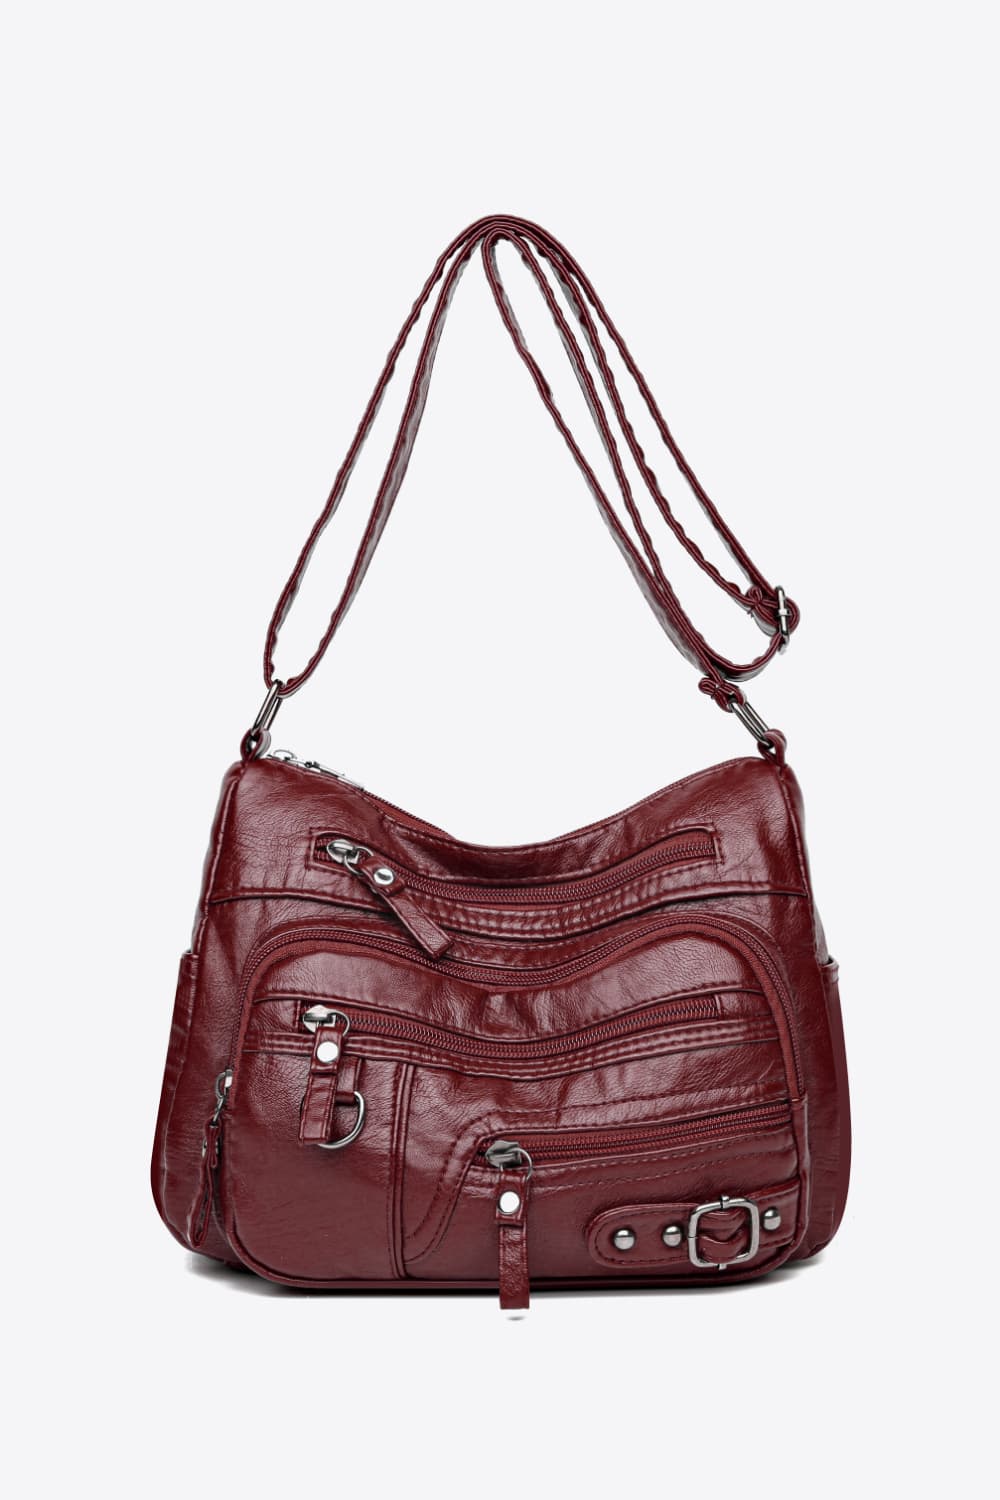 Multi-Pocket PU Leather Crossbody Bag Burgundy One Size